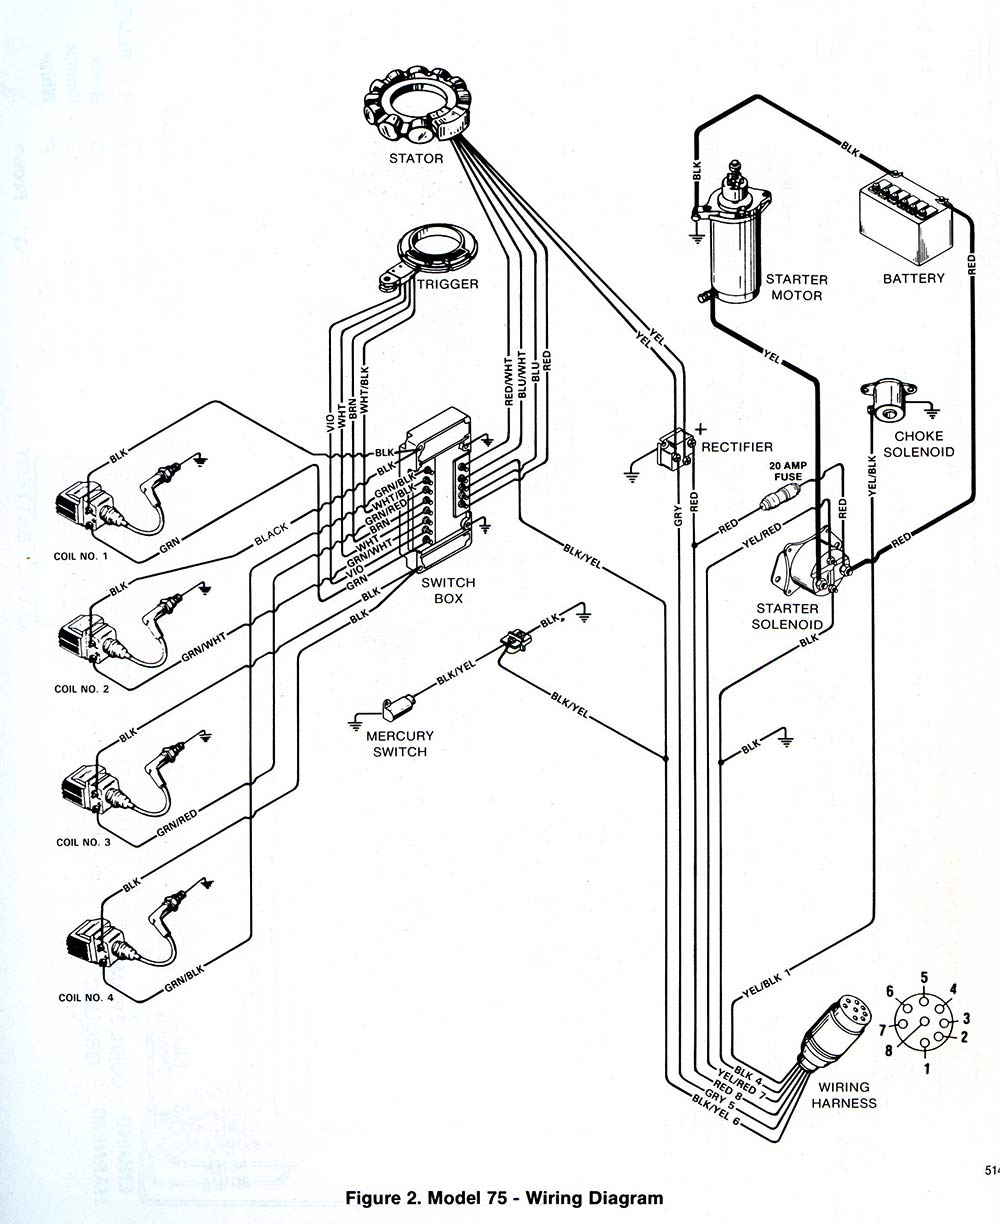 Wiring Diagram Mercury 25Hp Outboard : I Have A 2004 50hp Mercury Motor